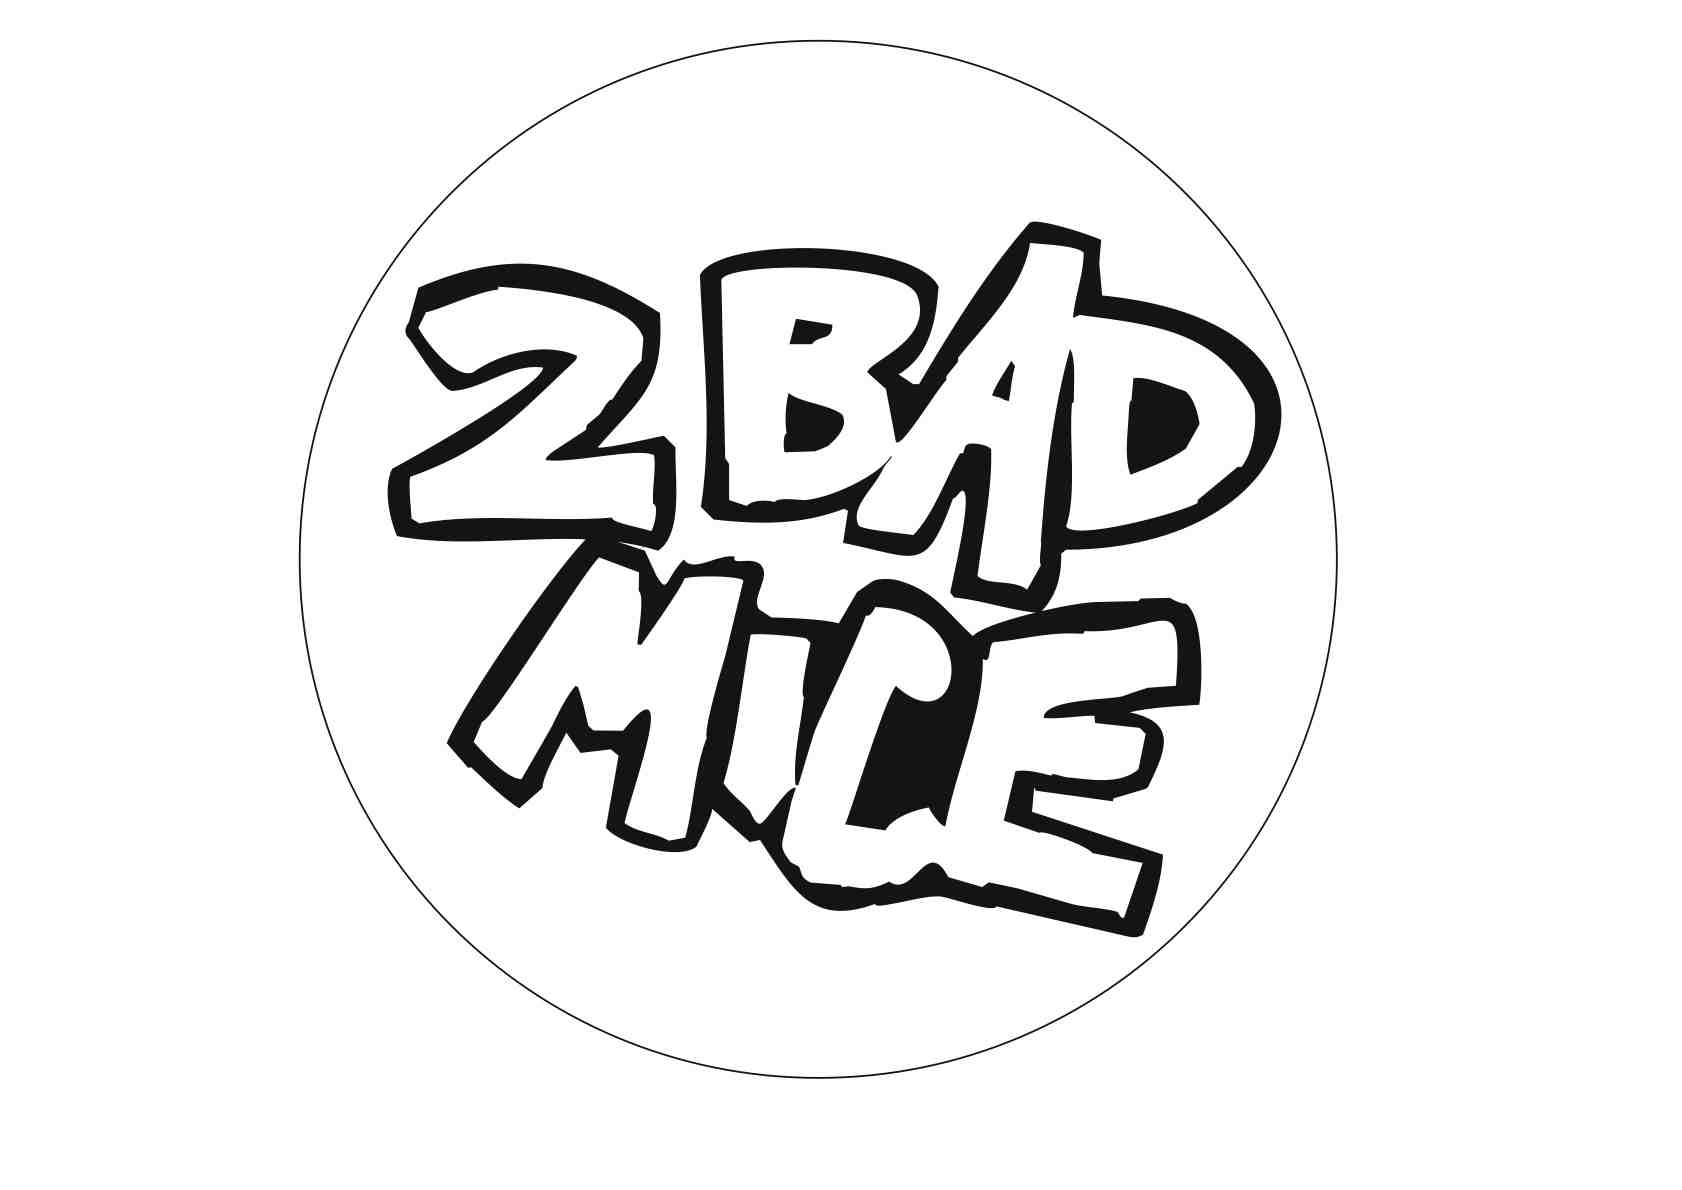 2 BAD MICE